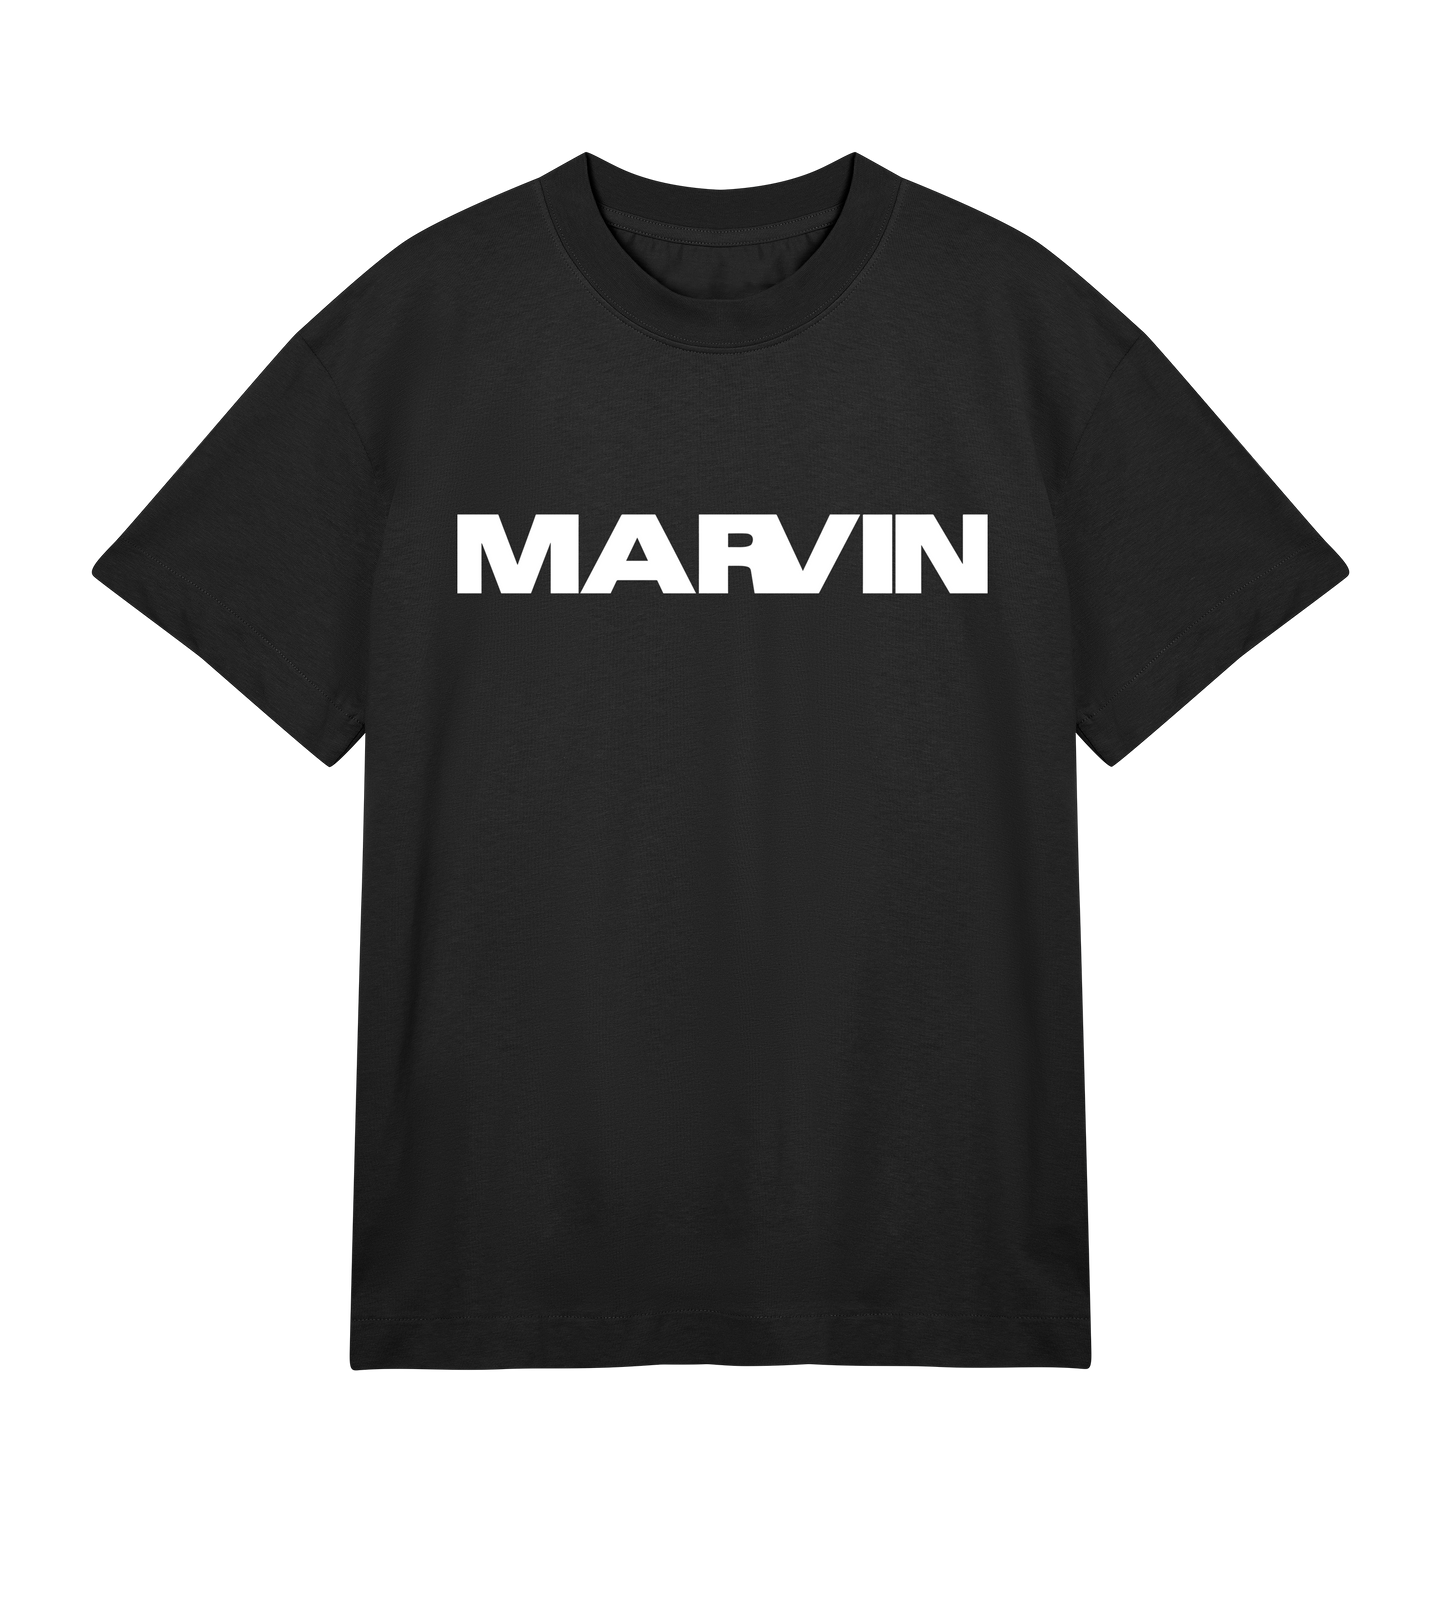 MARVIN SHORT-SLEEVE CREW NECK T-SHIRT